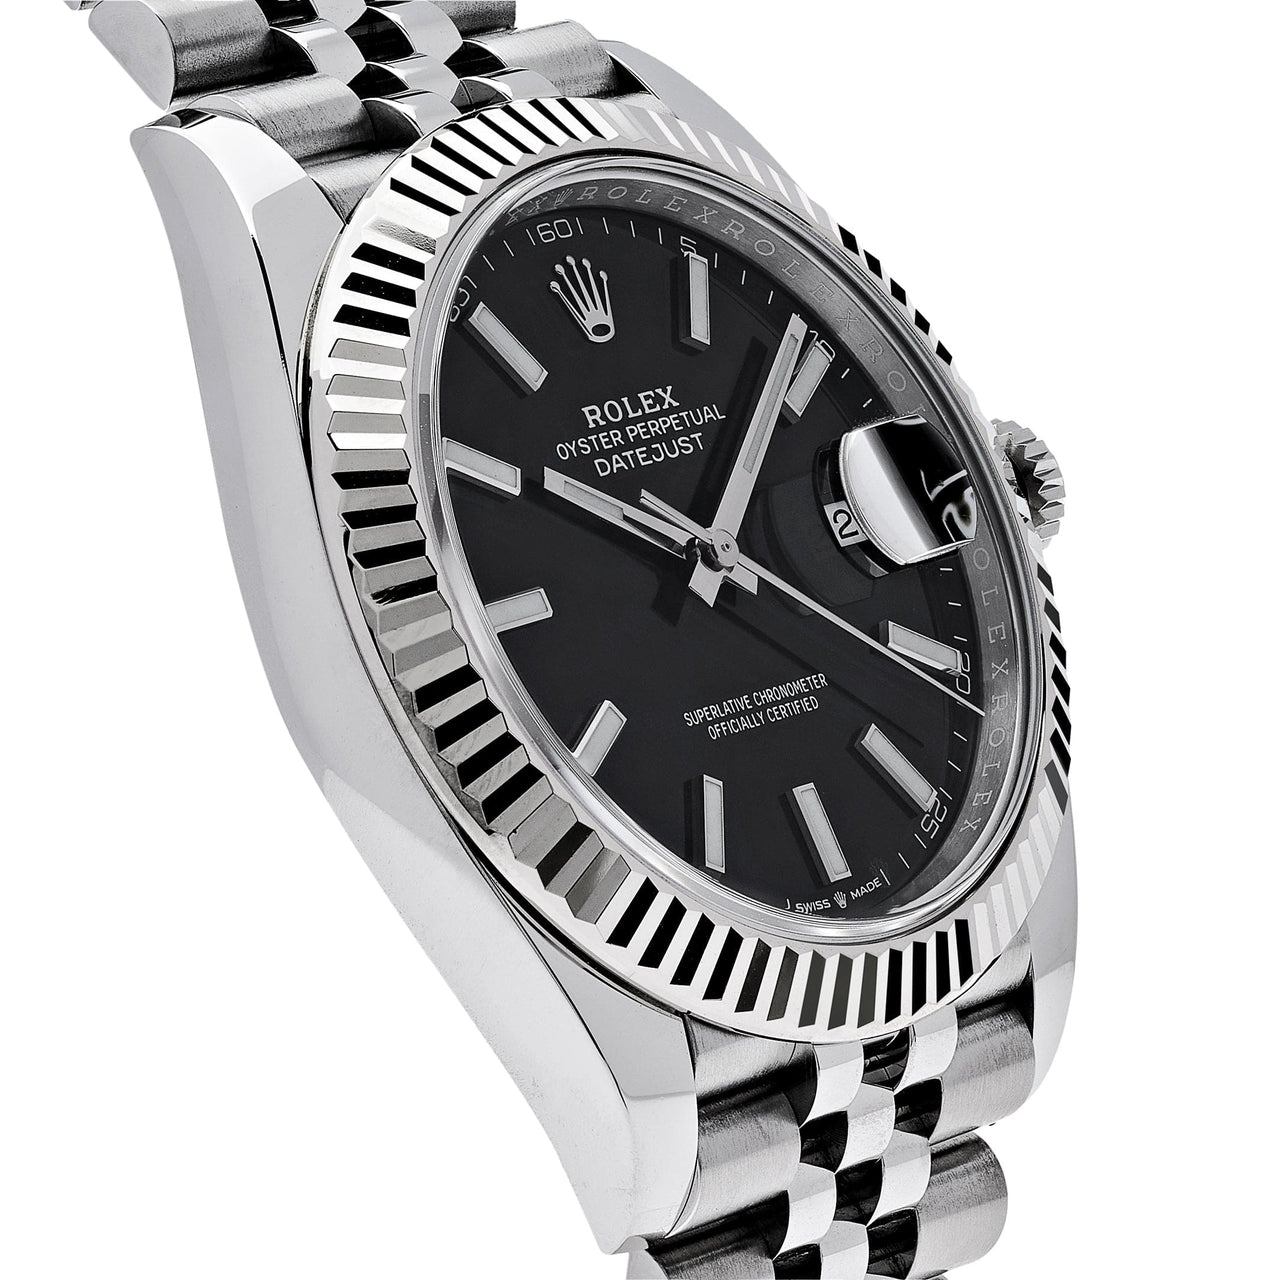 Luxury Watch Rolex Datejust 41 Steel & White Gold Black Dial Jubilee 126334 Wrist Aficionado